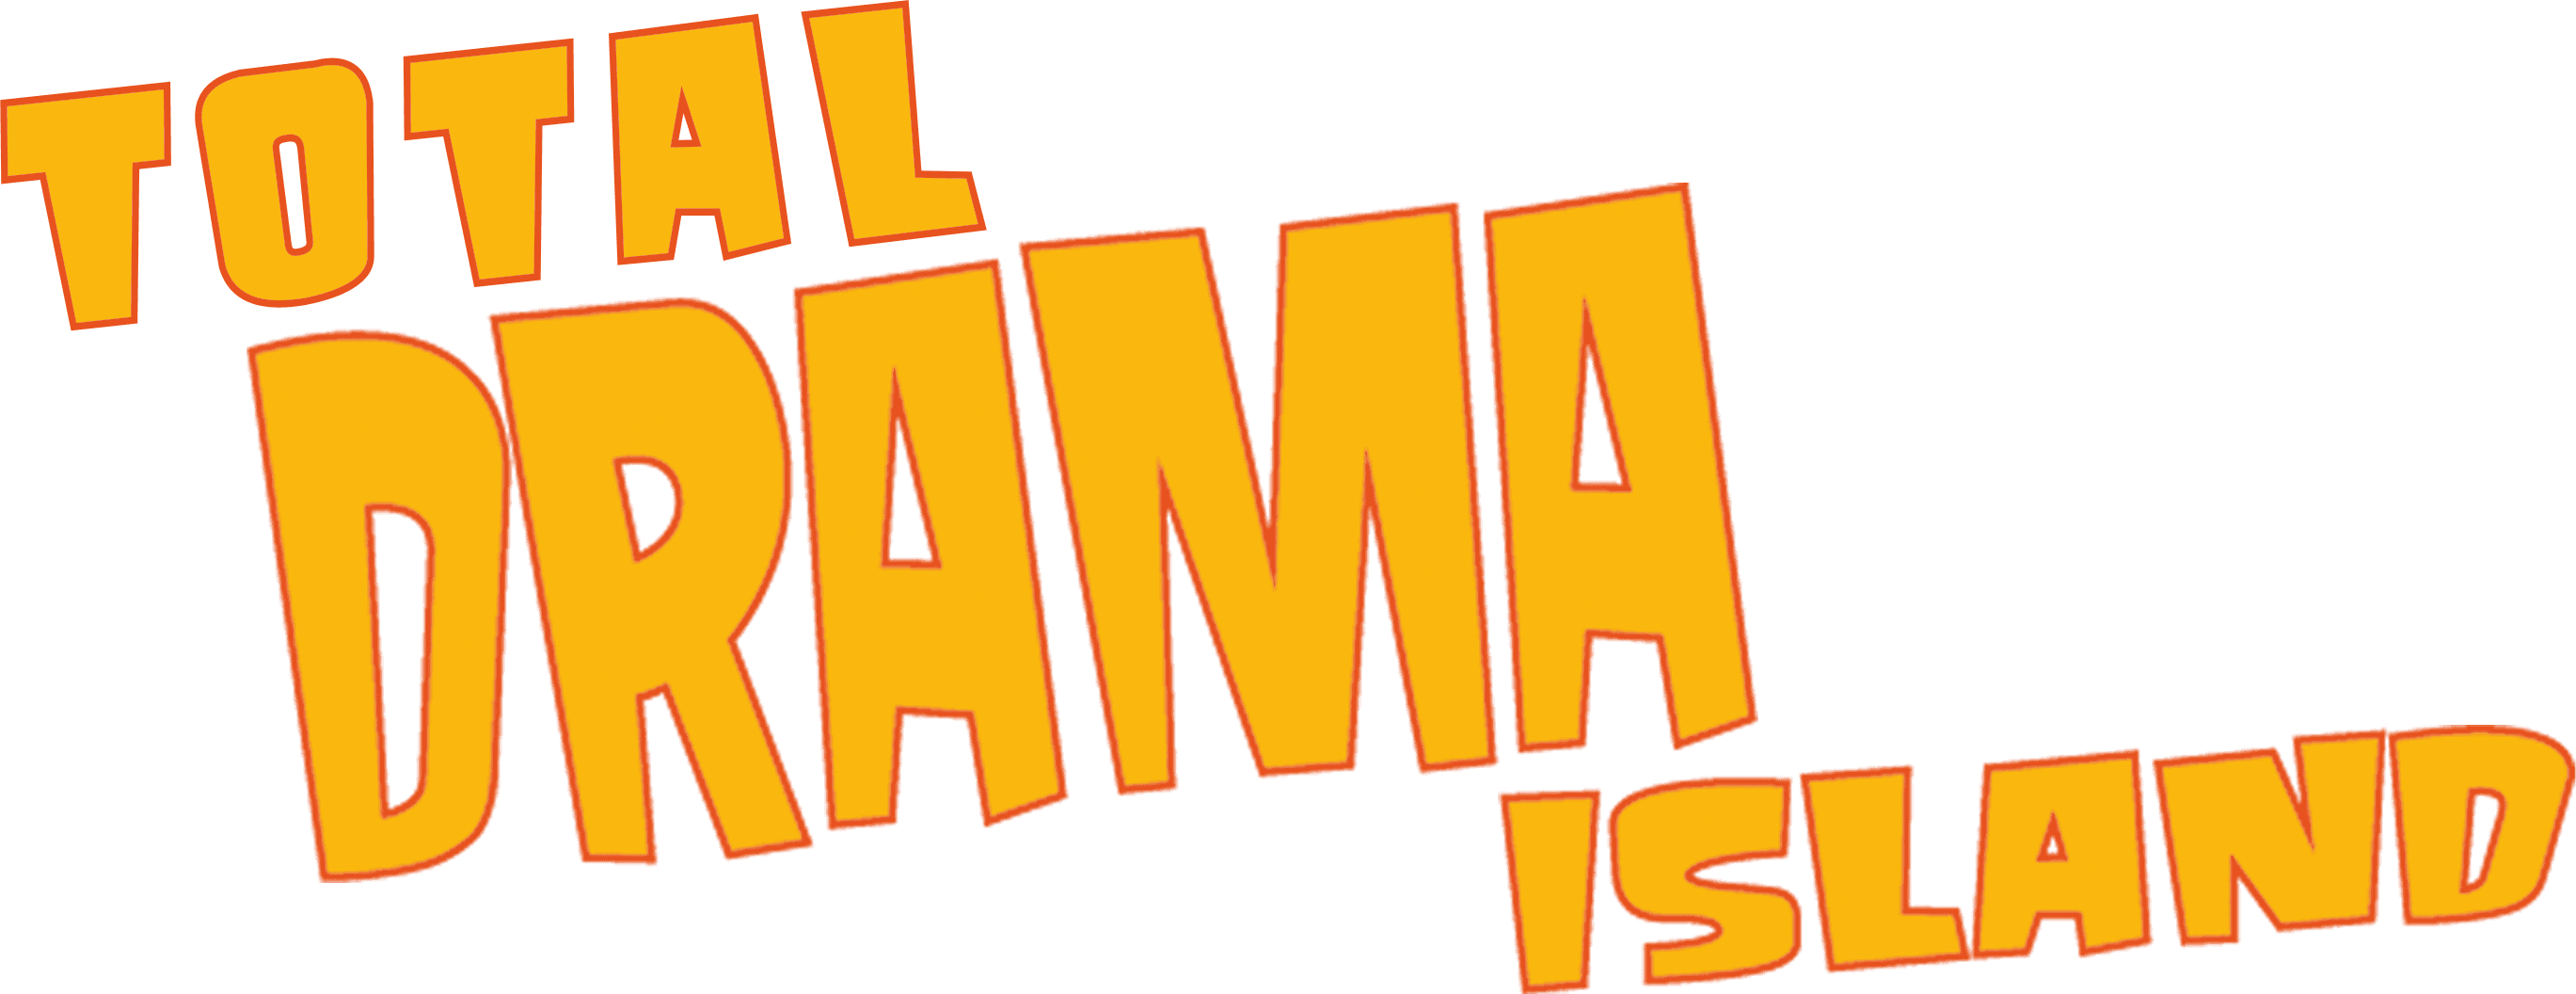 Total Drama Island logo